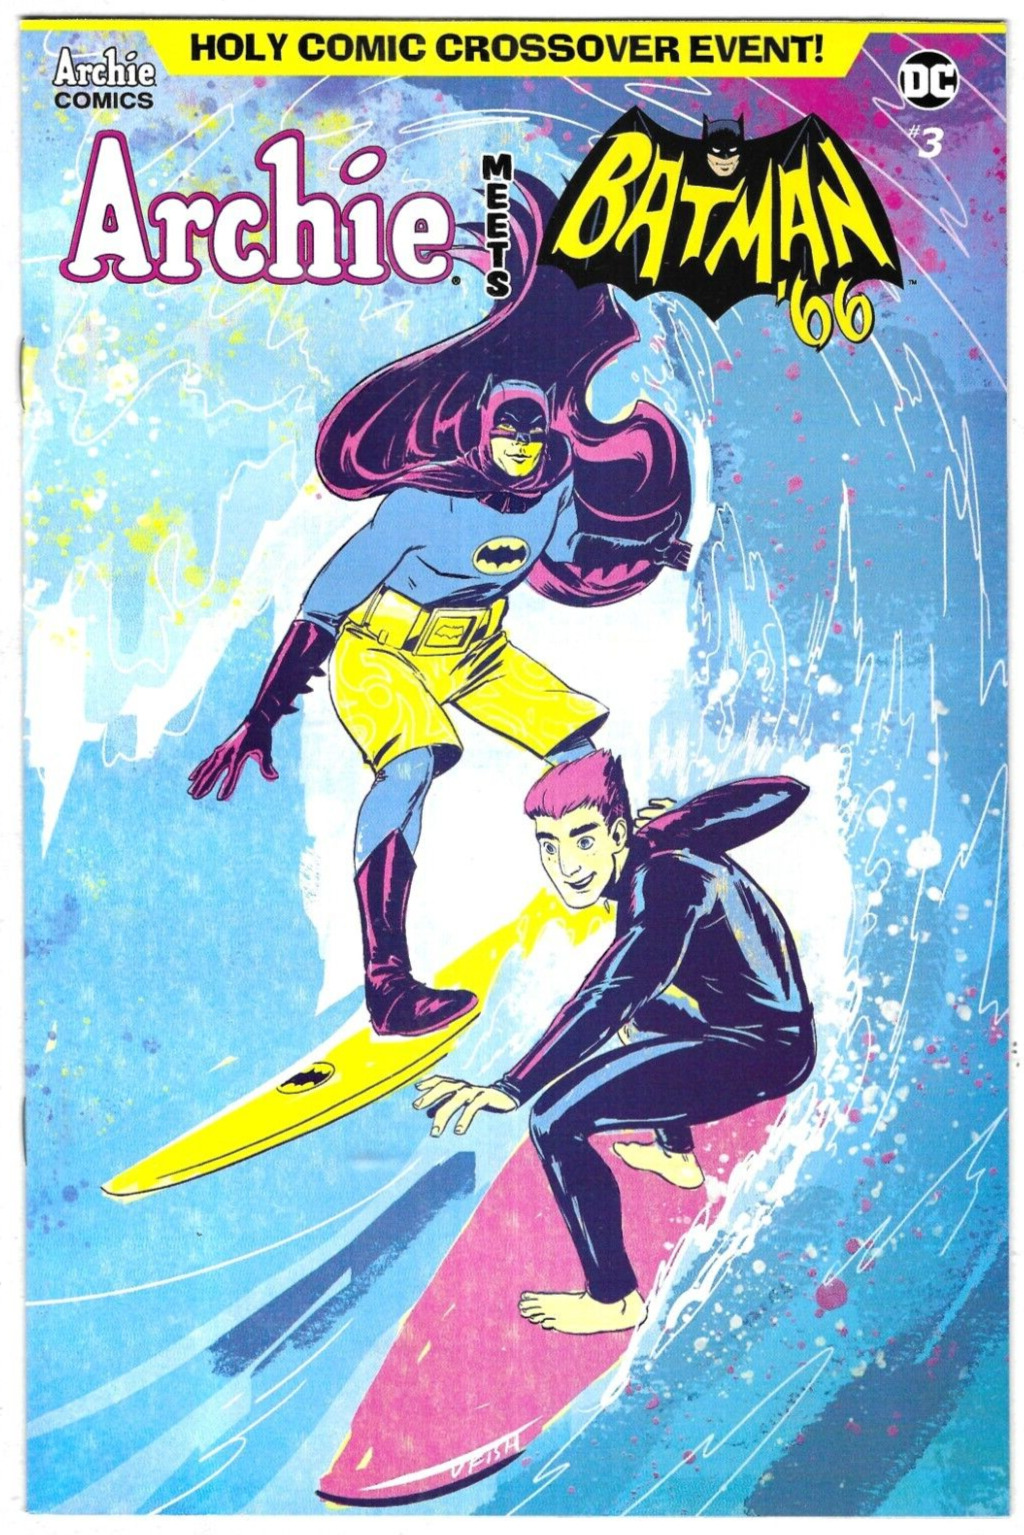 Archie Meets Batman 66 Comic 3 First Print Cover D Variant Veronica Fish 2018